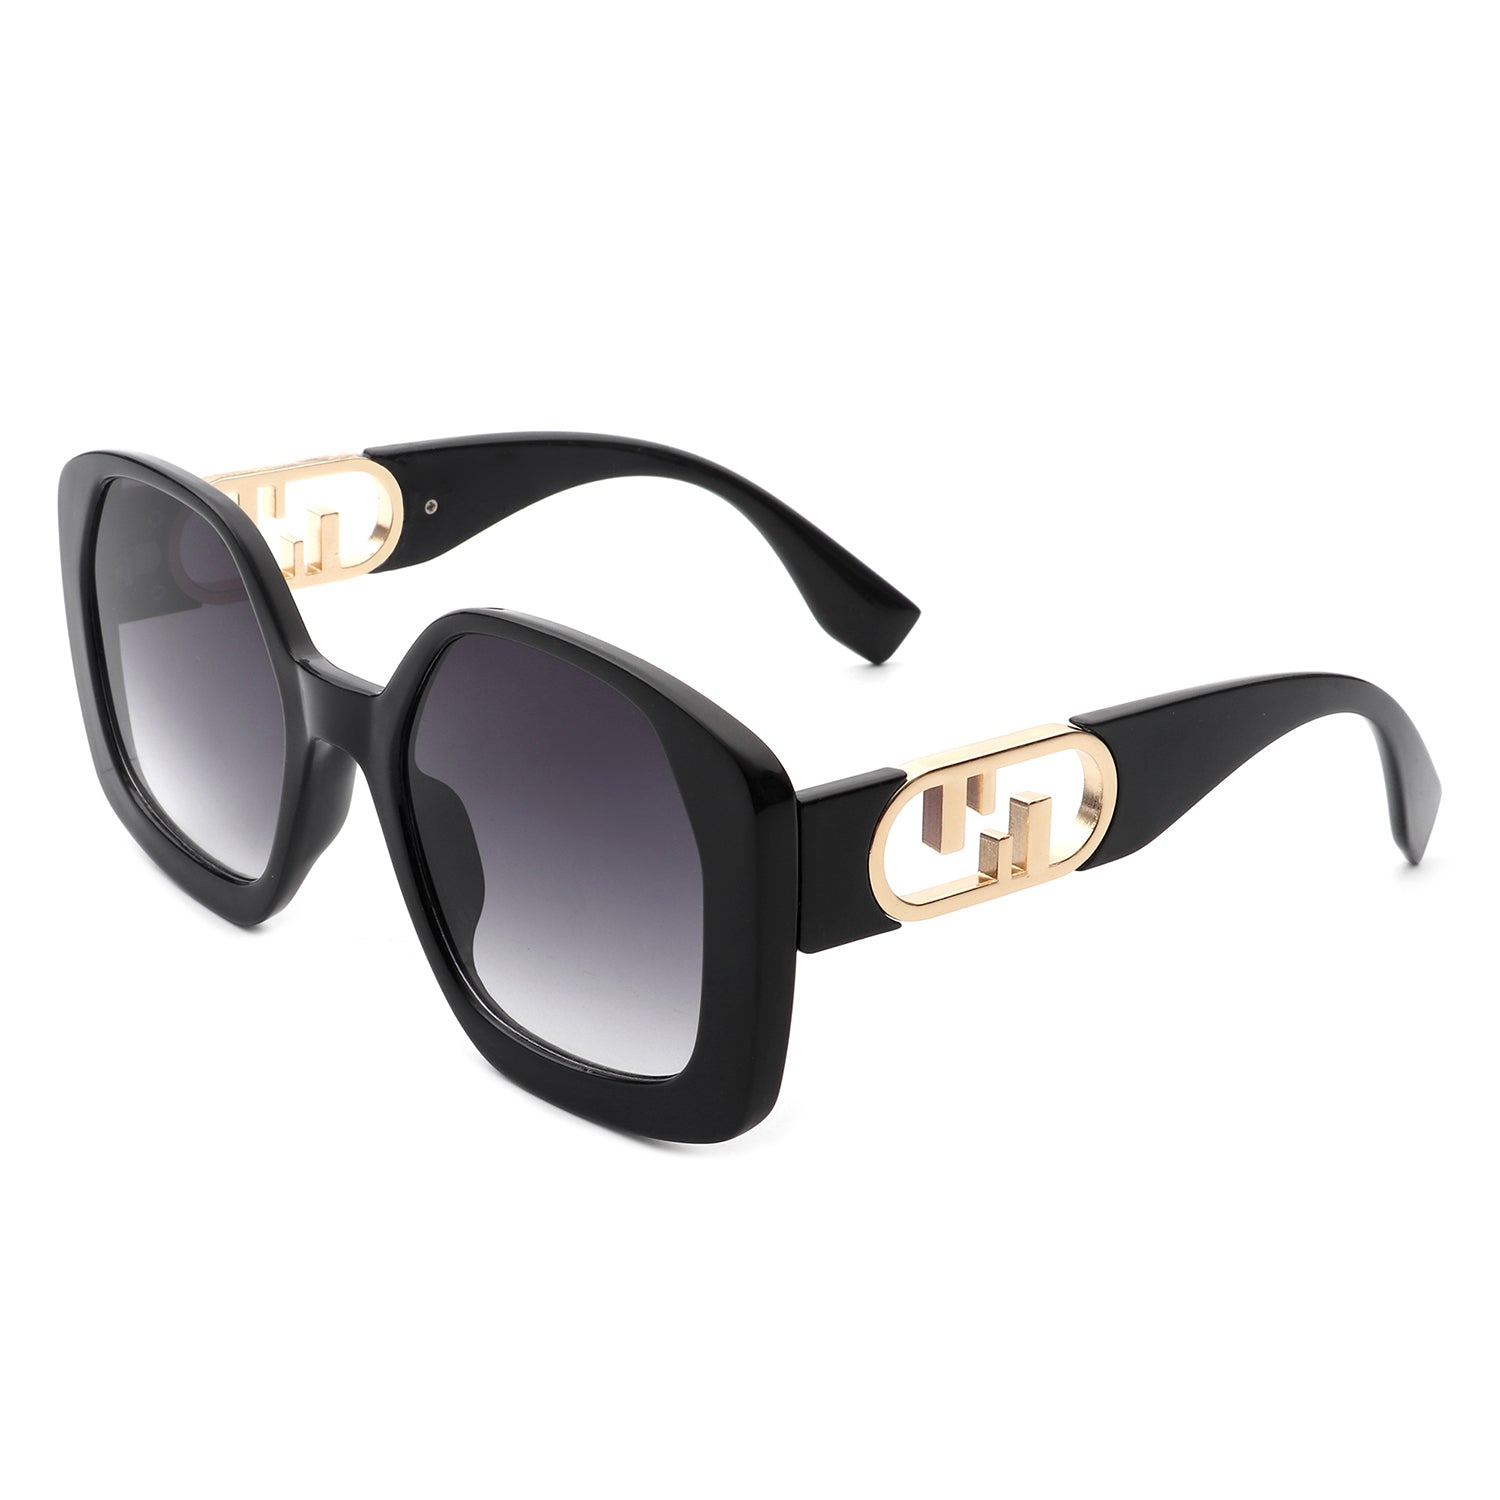 Oversize Chunky Square Women Fashion Sunglasses by IRIS FASHION SUNGLASSES